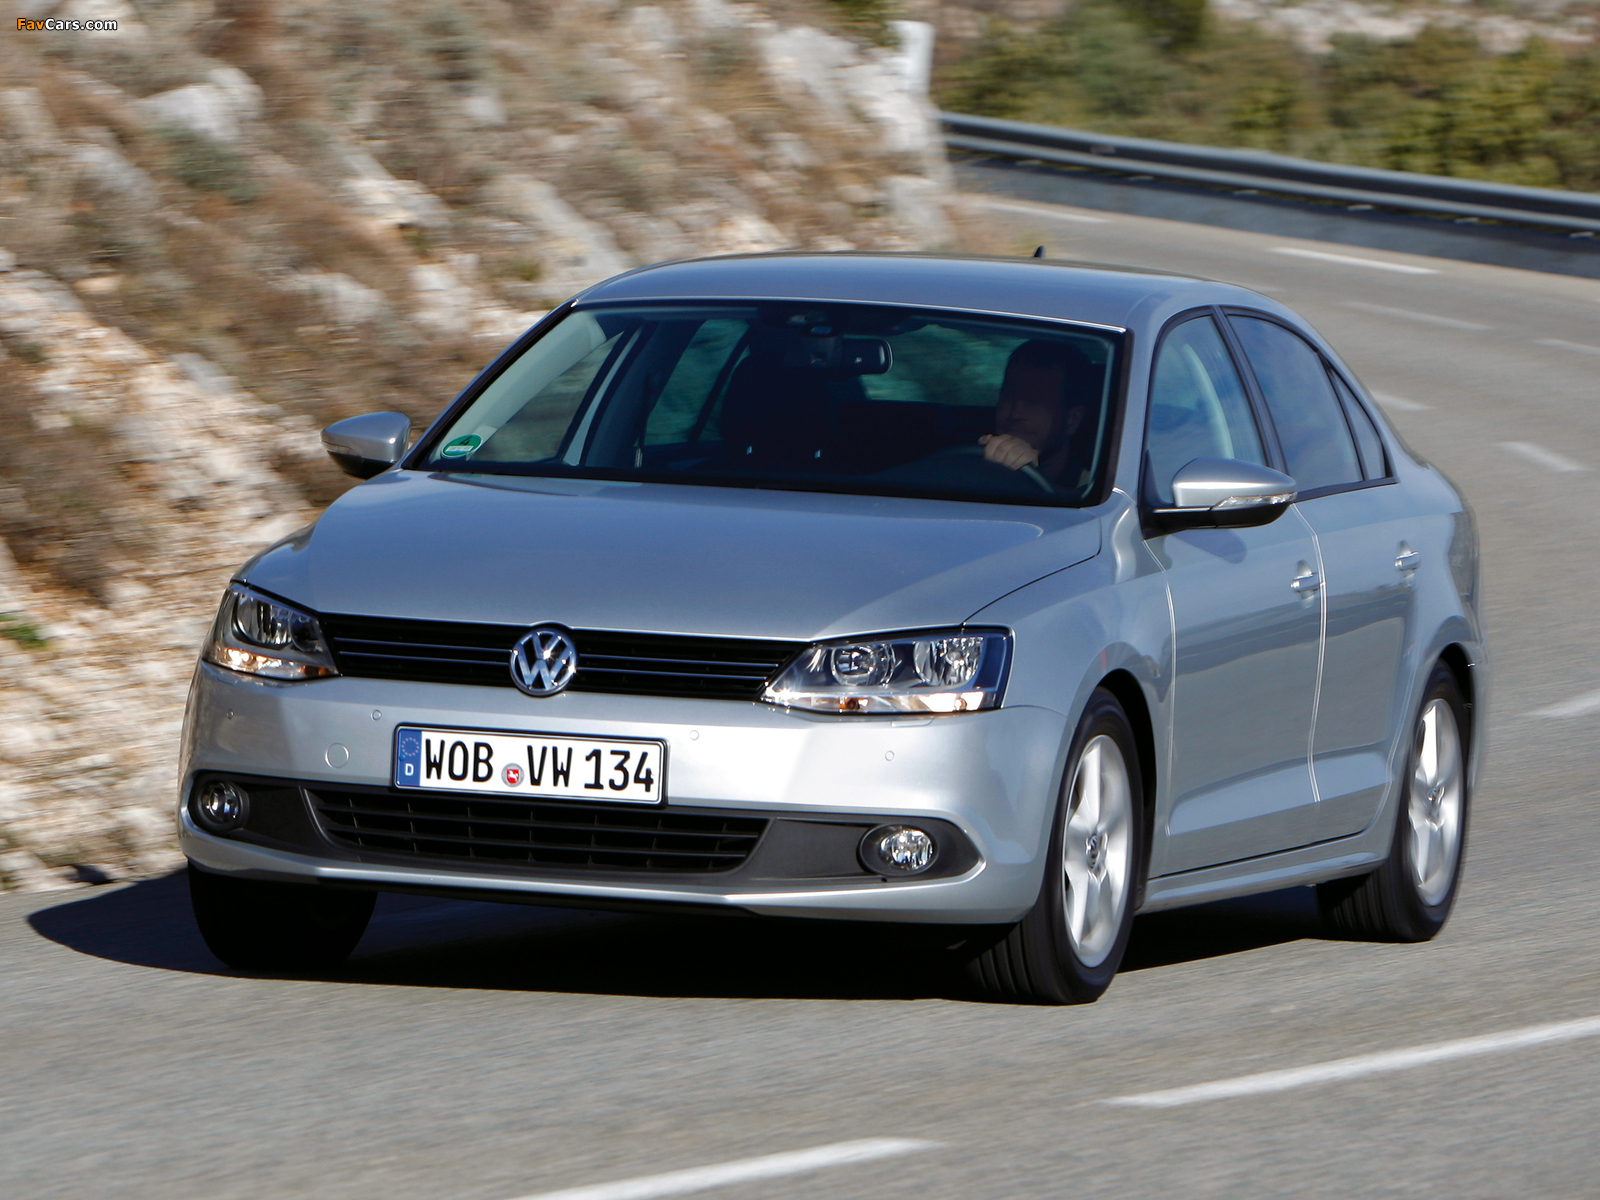 Volkswagen Jetta (Typ 1B) 2010 images (1600 x 1200)